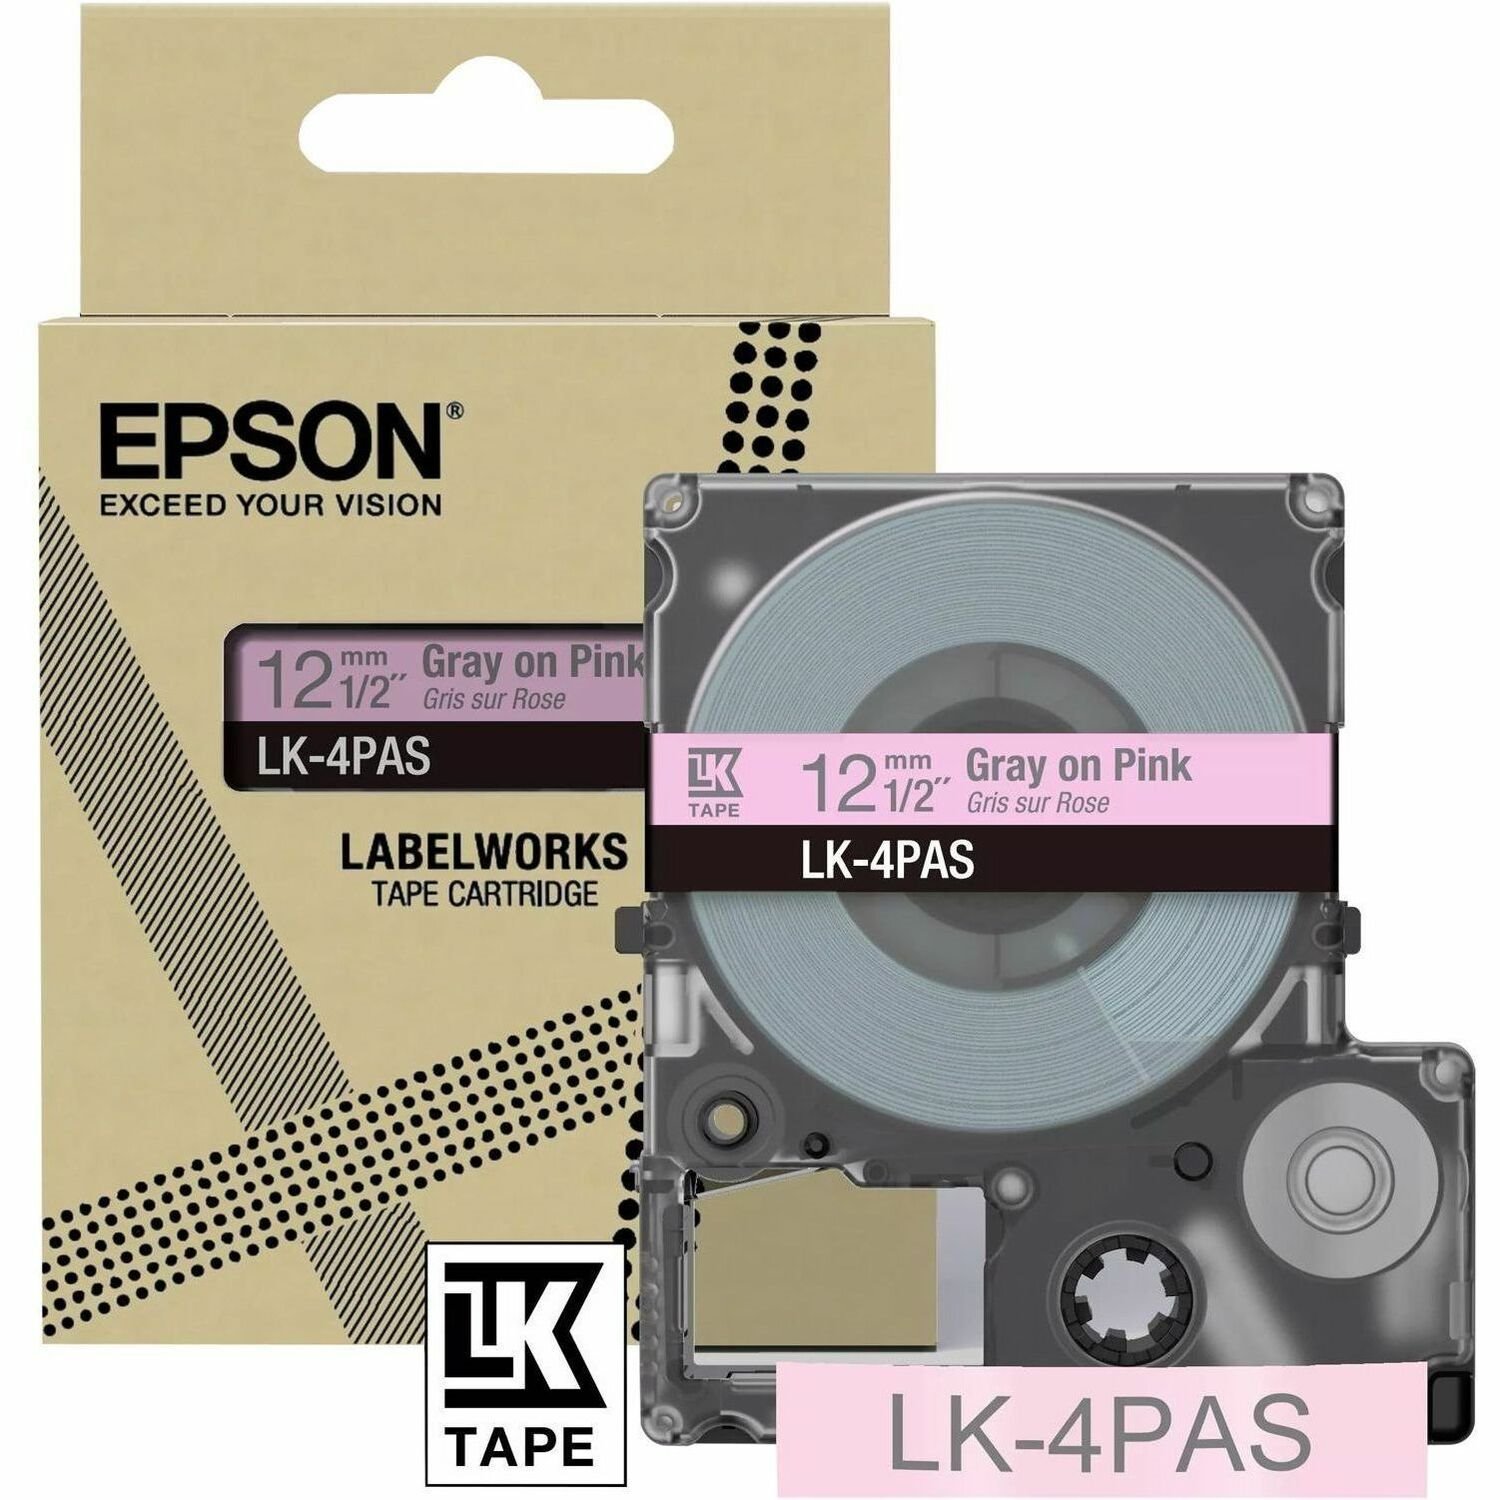 Epson LK-4PAS Label Tape